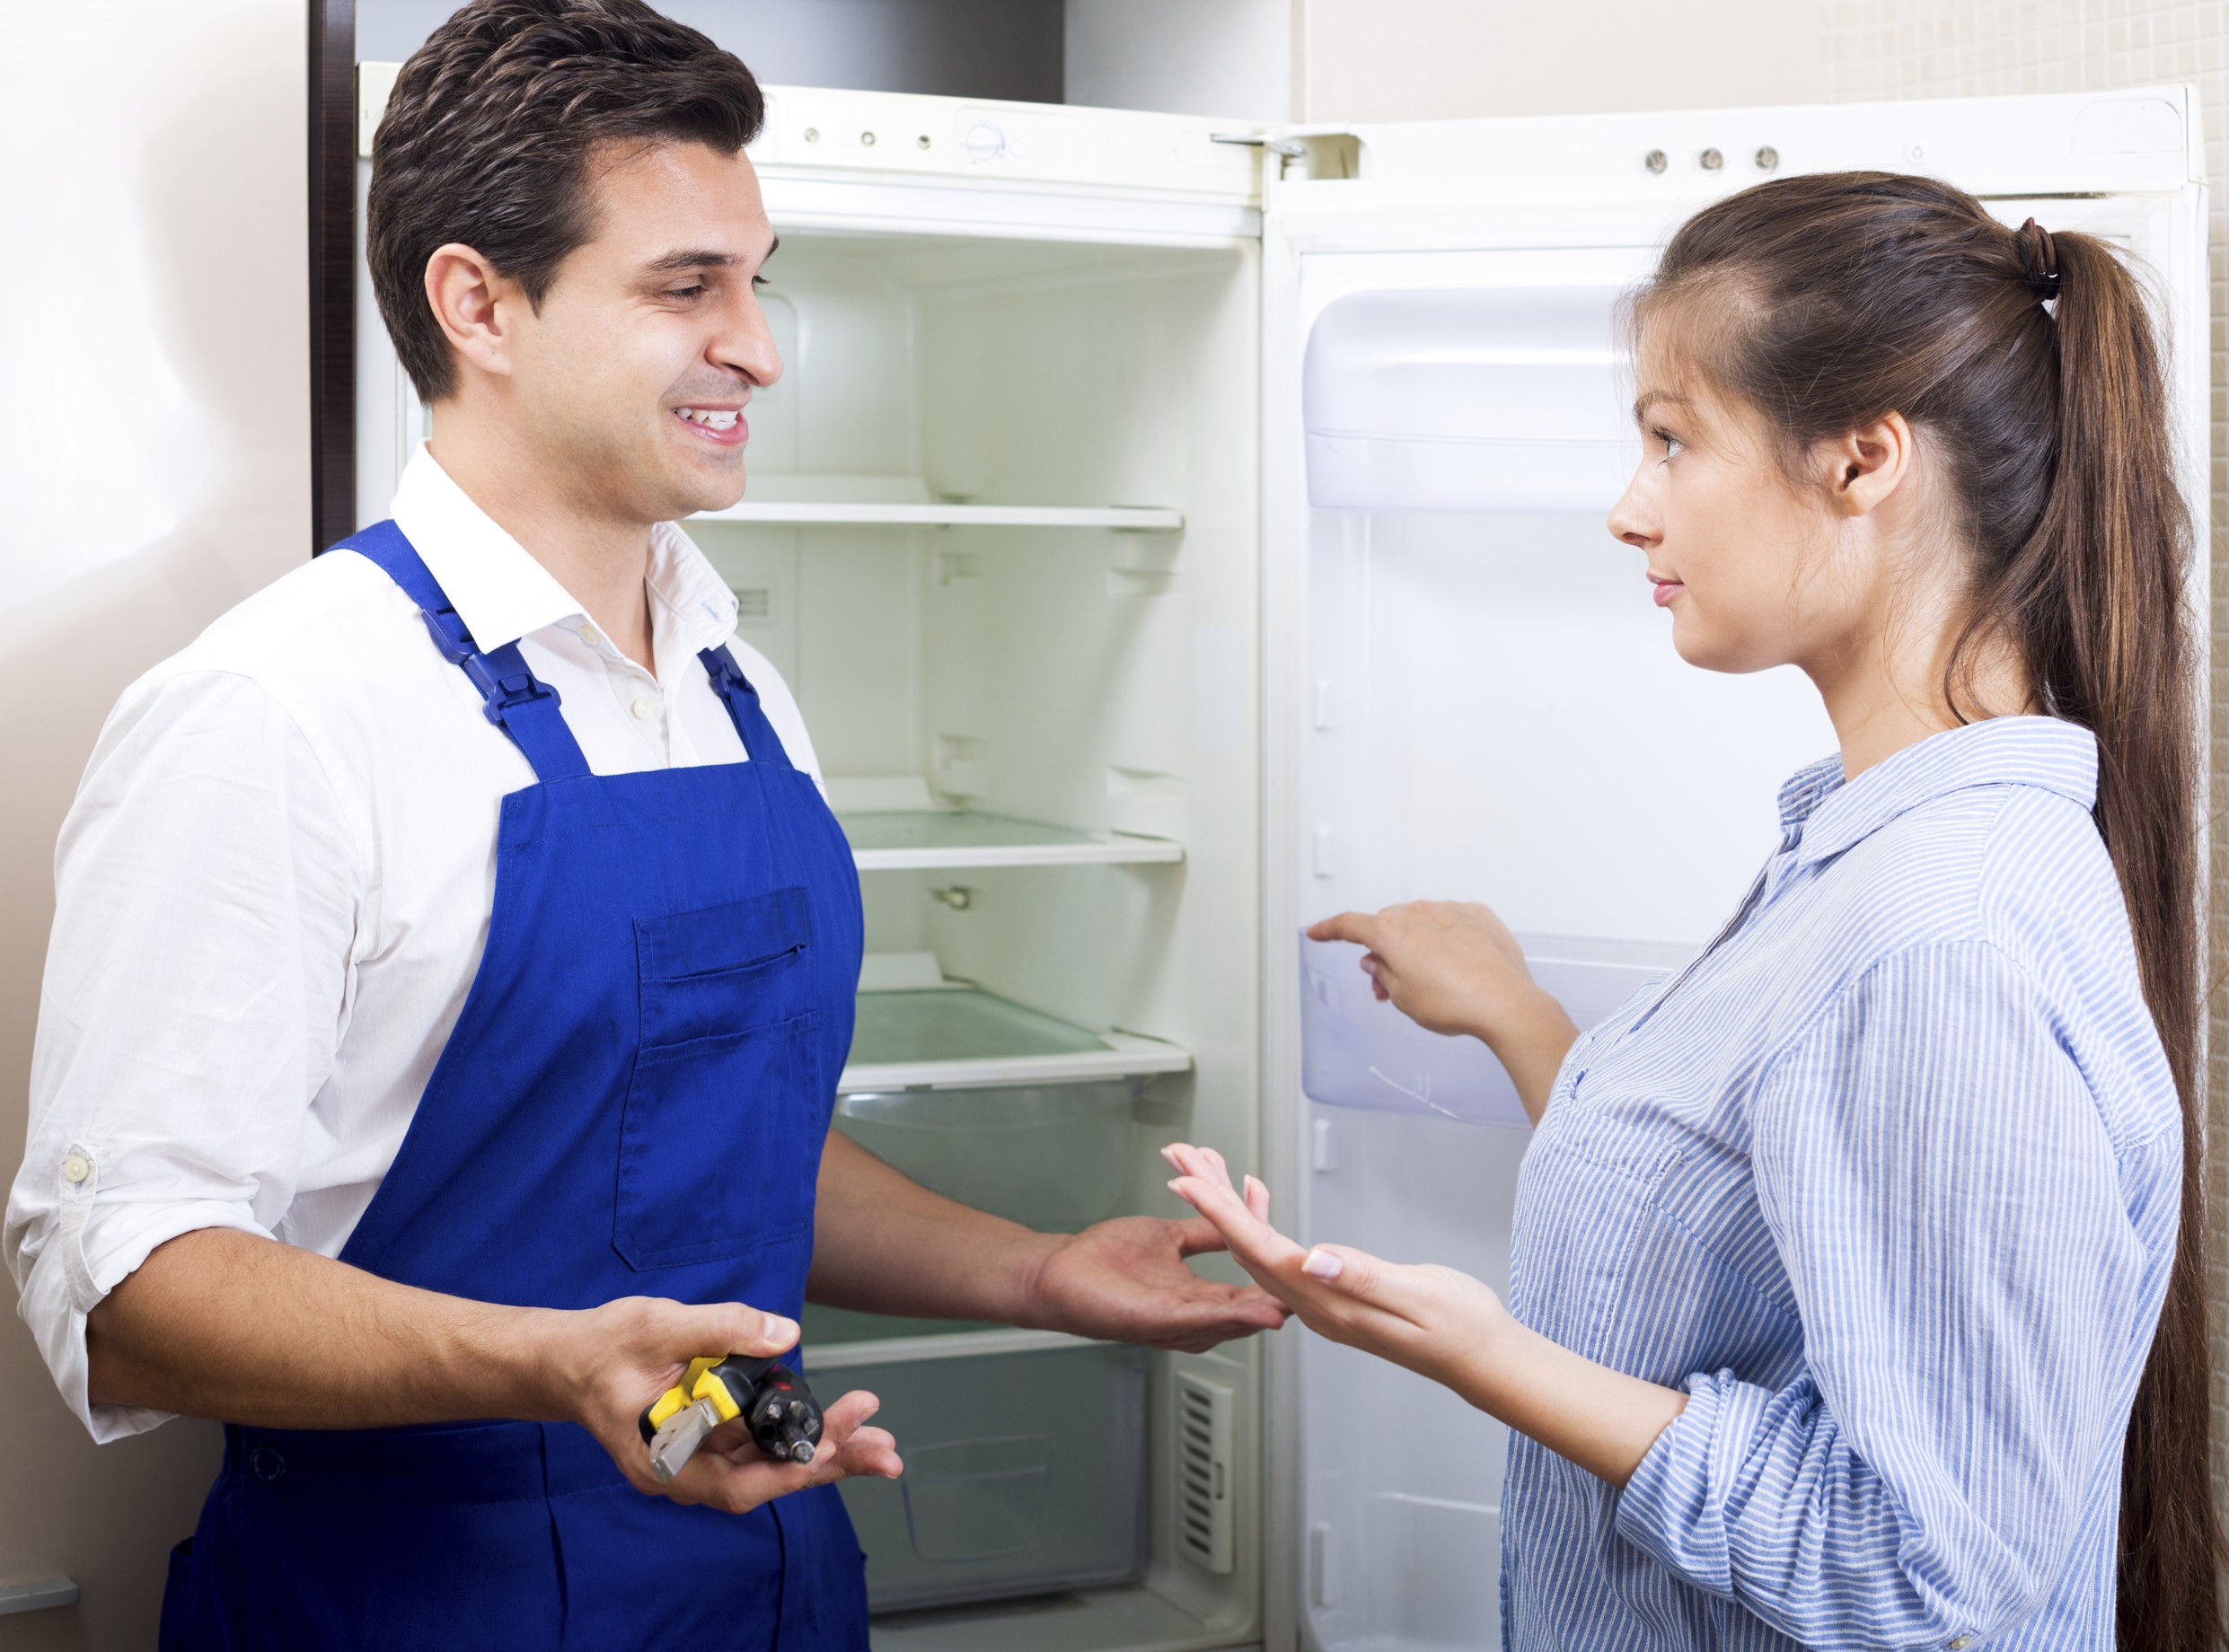 Fridge Repair Near You Dependable Refrigeration & Appliance Repair Service